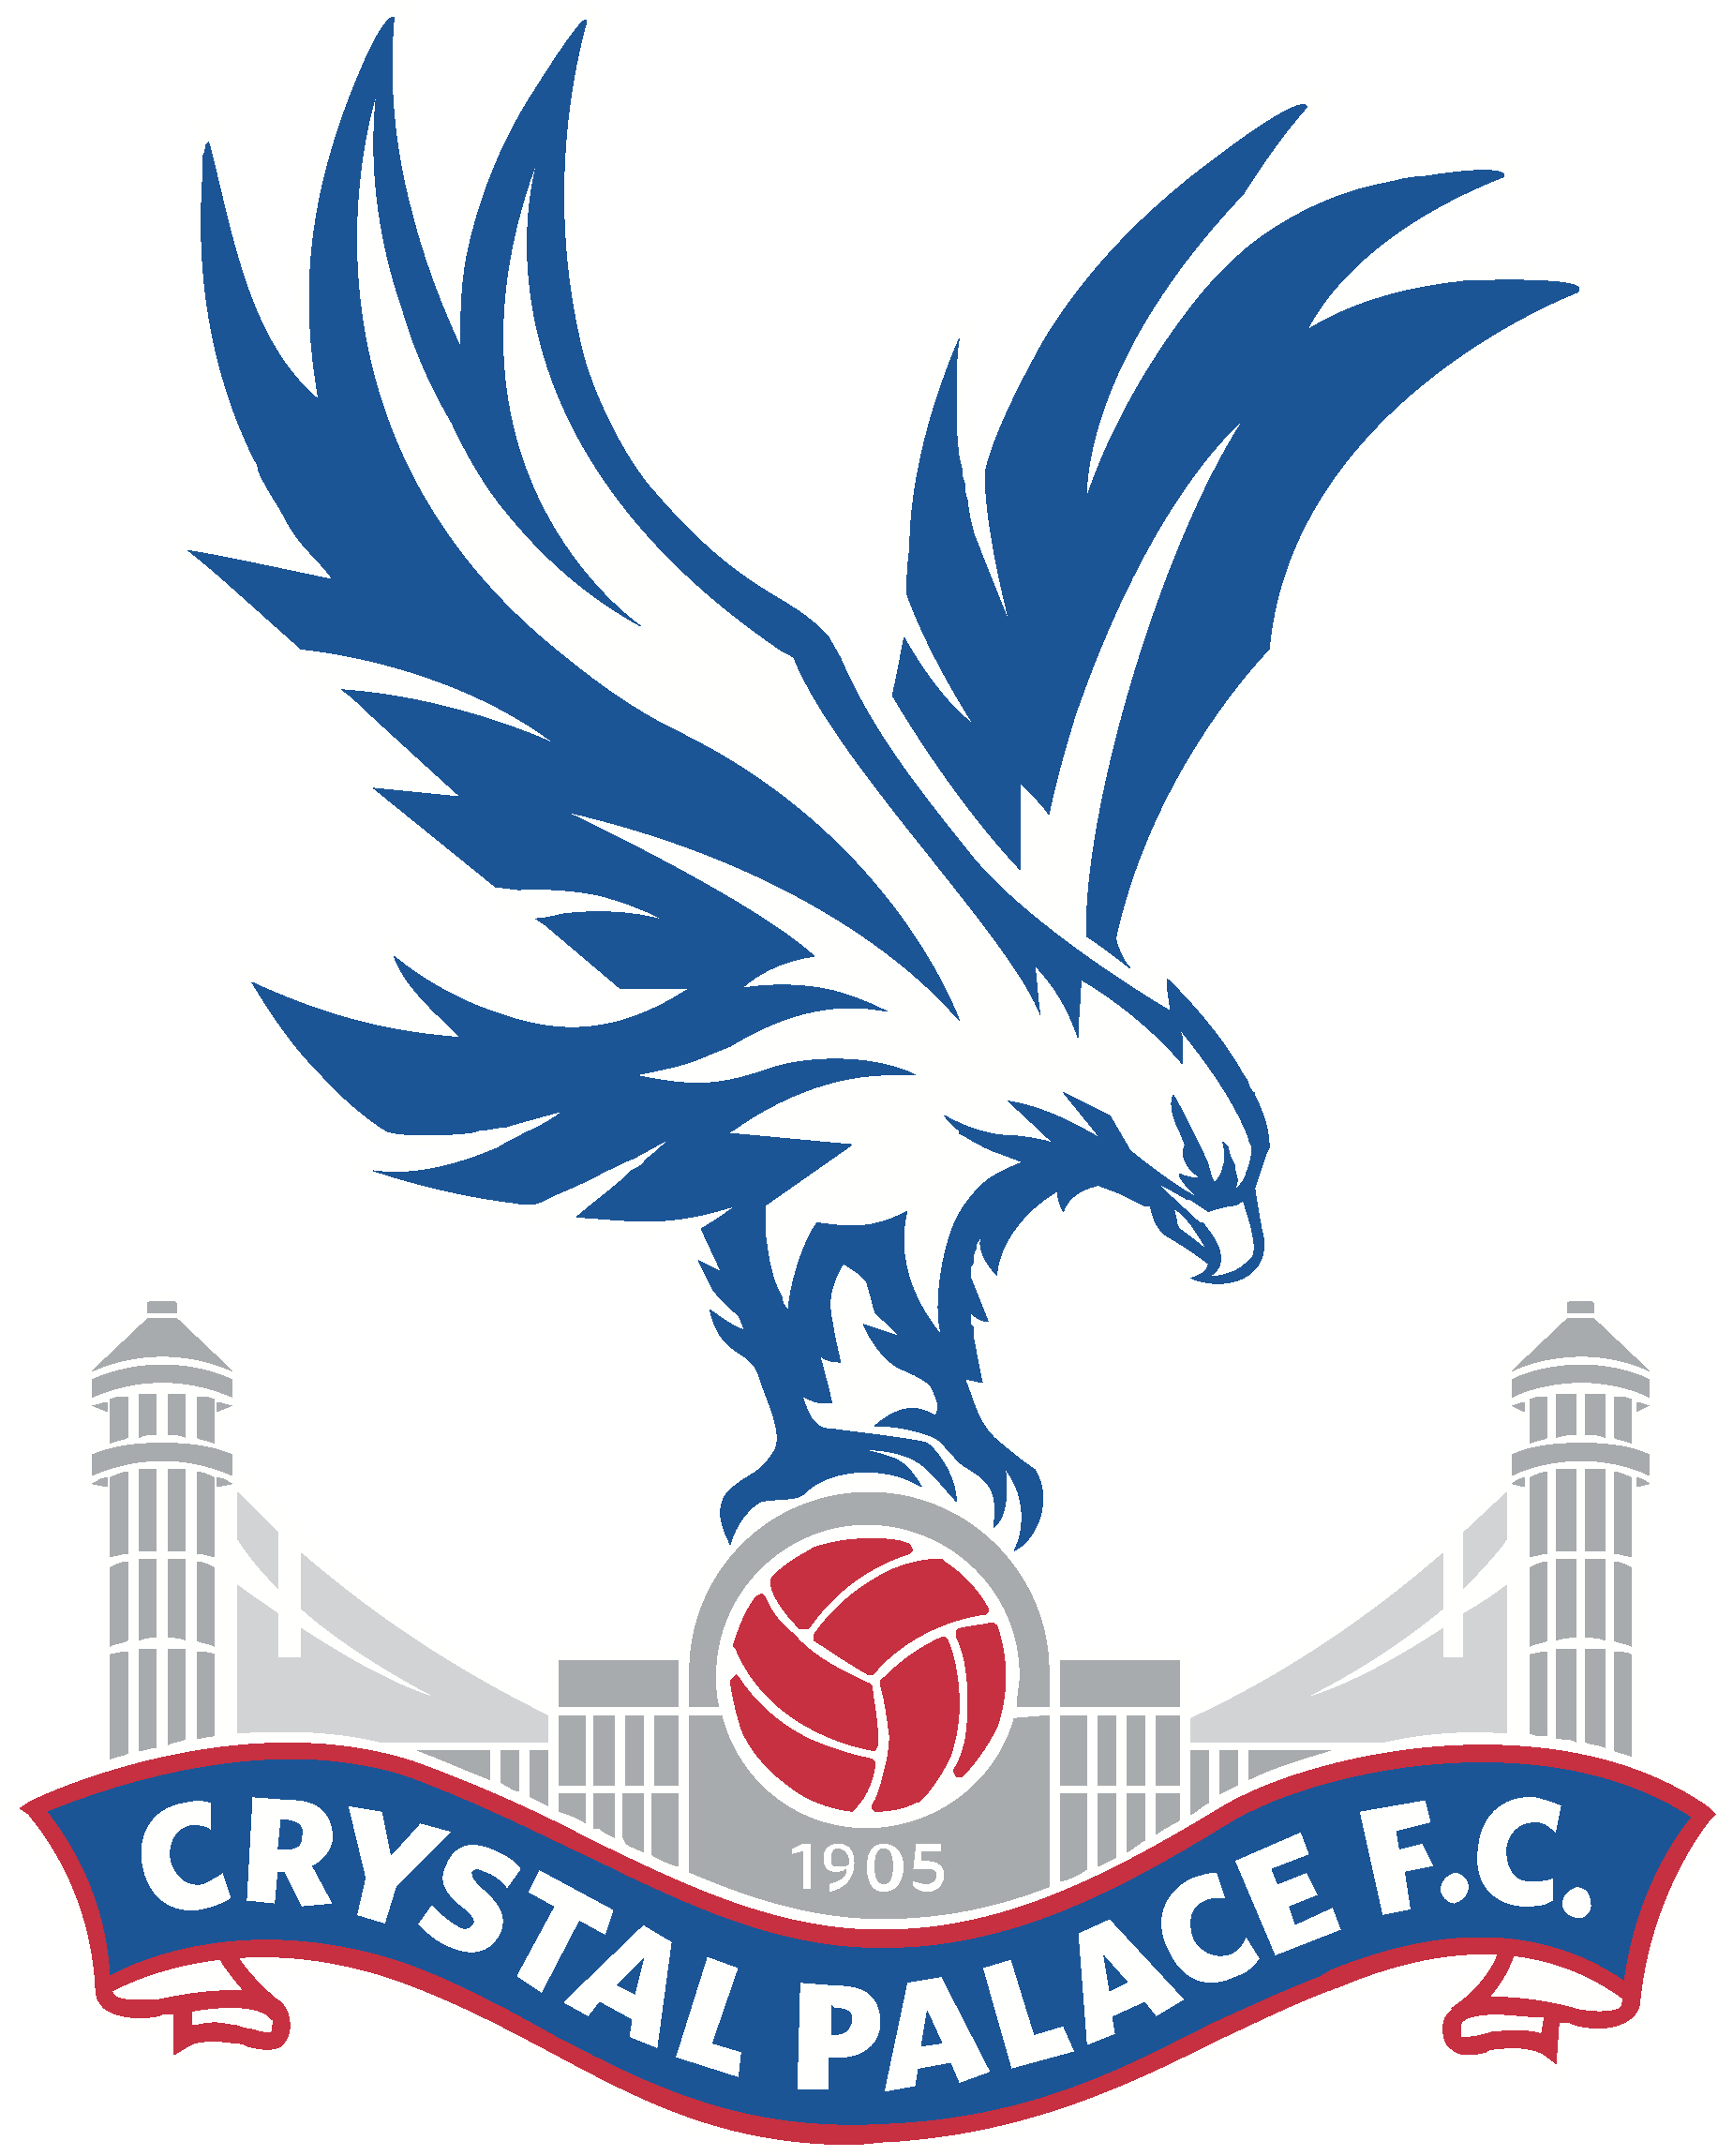 Crystal Palace Football Club Logo [eps] - Crystal Palace F.c. (1849x2300)